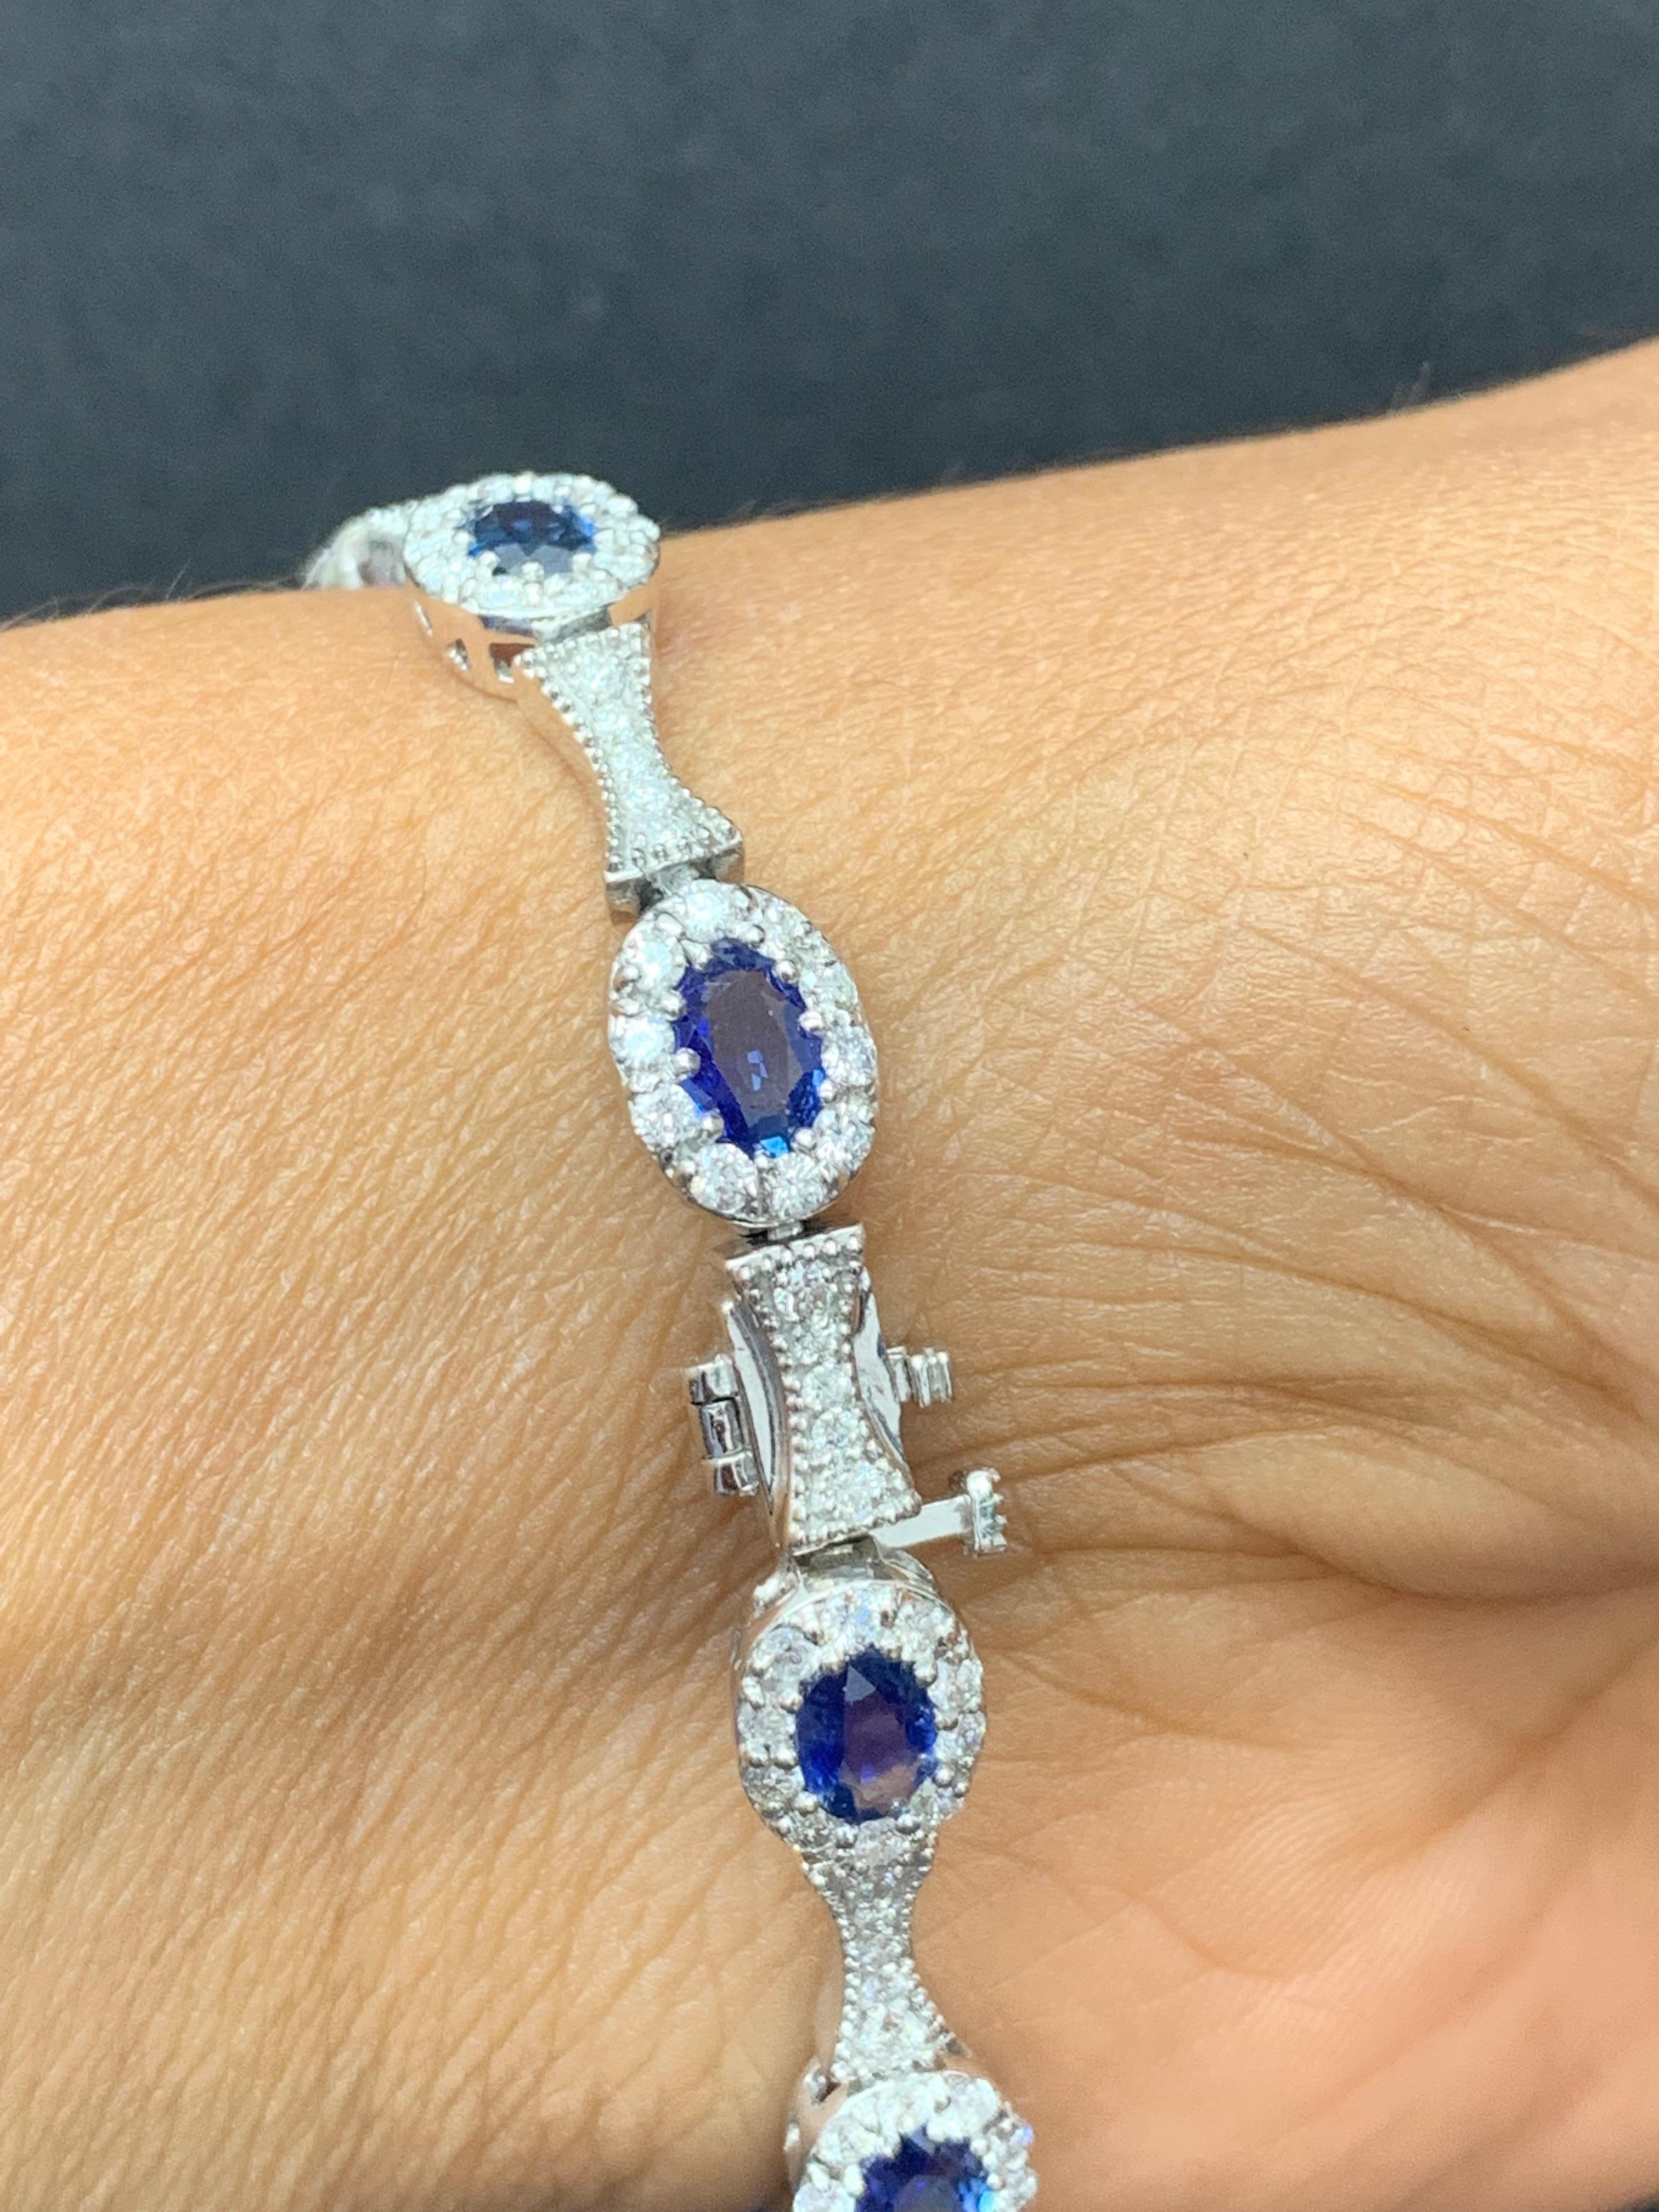 6.19 Carat Oval Cut Blue Sapphire Diamond Bracelet in 14K White Gold For Sale 5